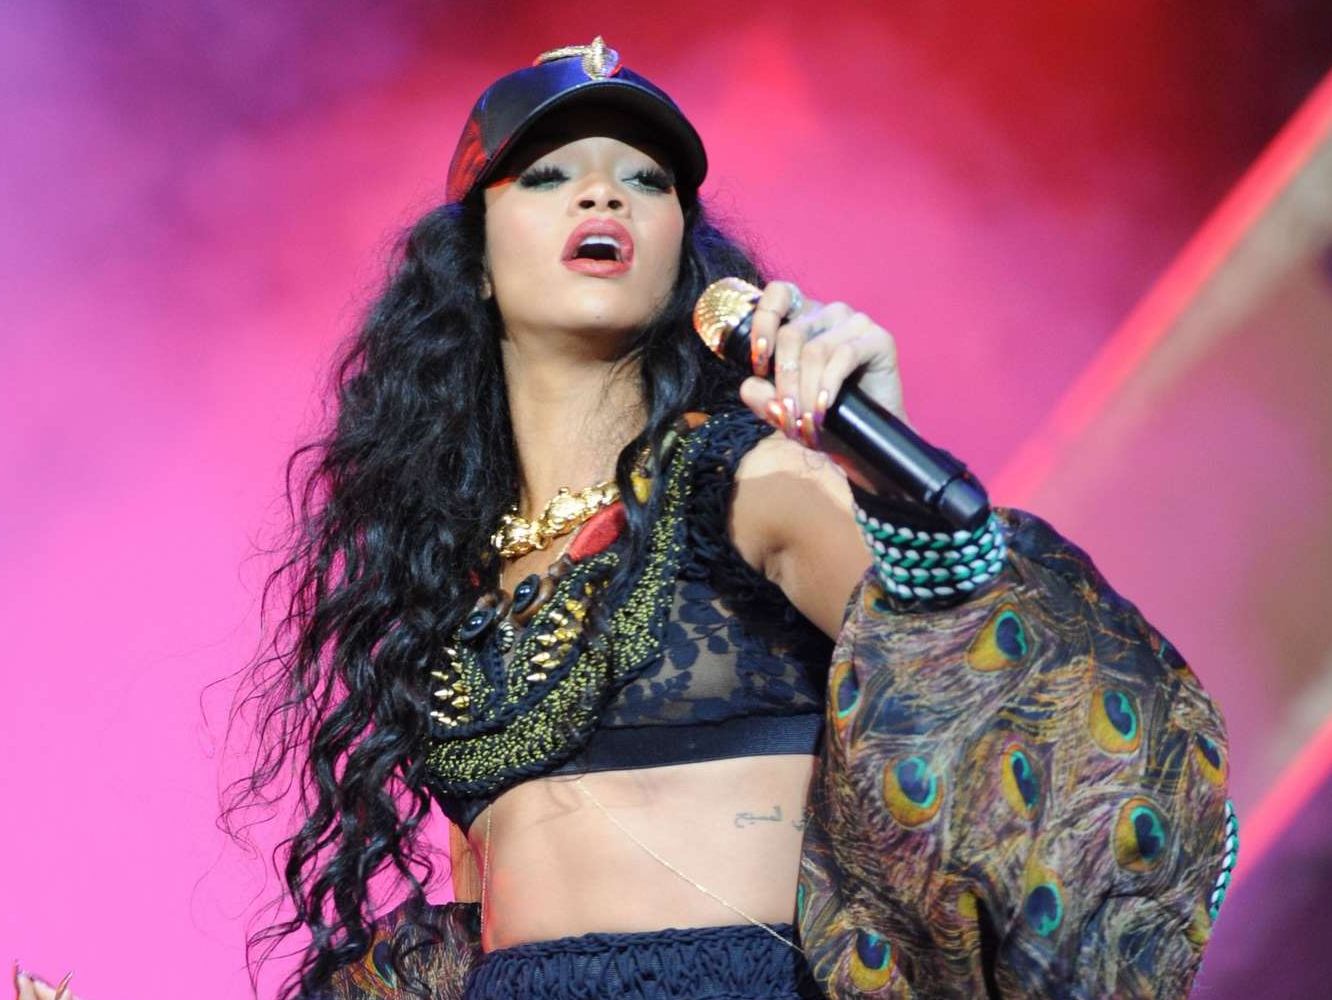  Pues tampoco parece que Rihanna vaya a actuar en el intermedio de la Super Bowl 2020